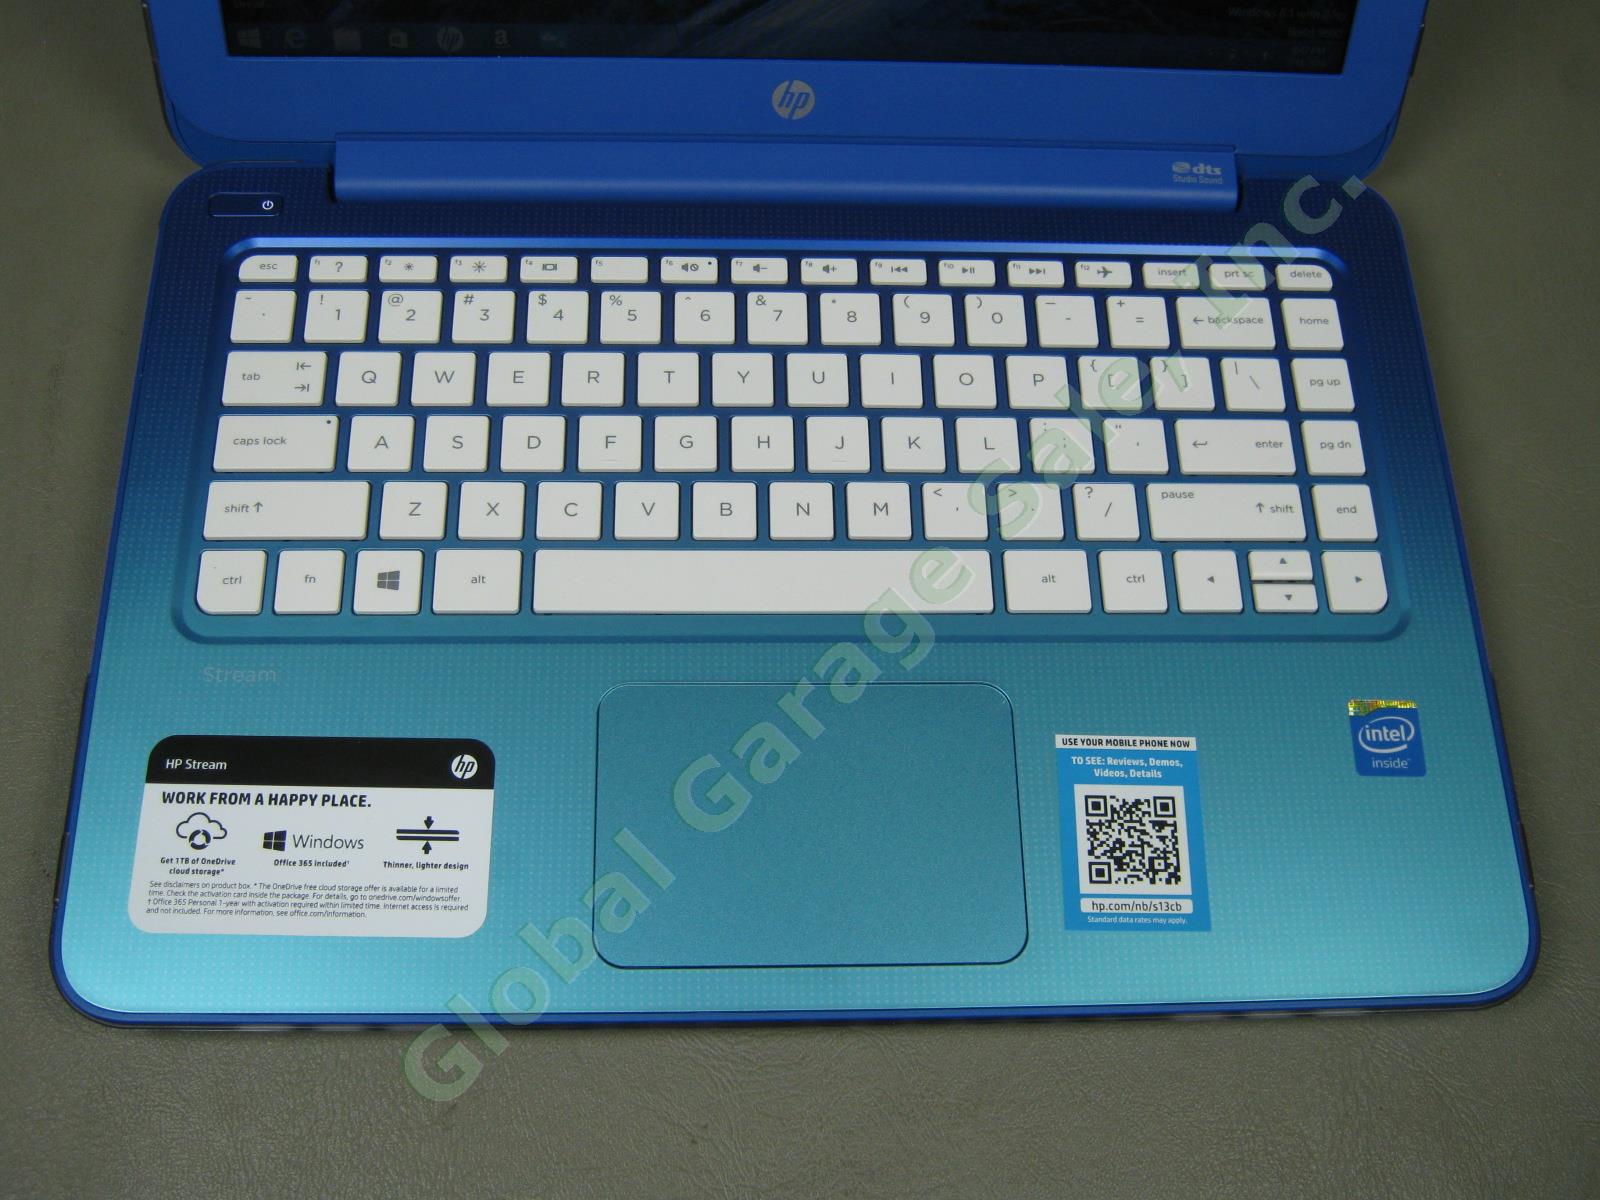 HP Stream 13.3" 13-c010nr Intel Celeron 2.16GHz 2GB 32GB Laptop + iPearl mCover 1